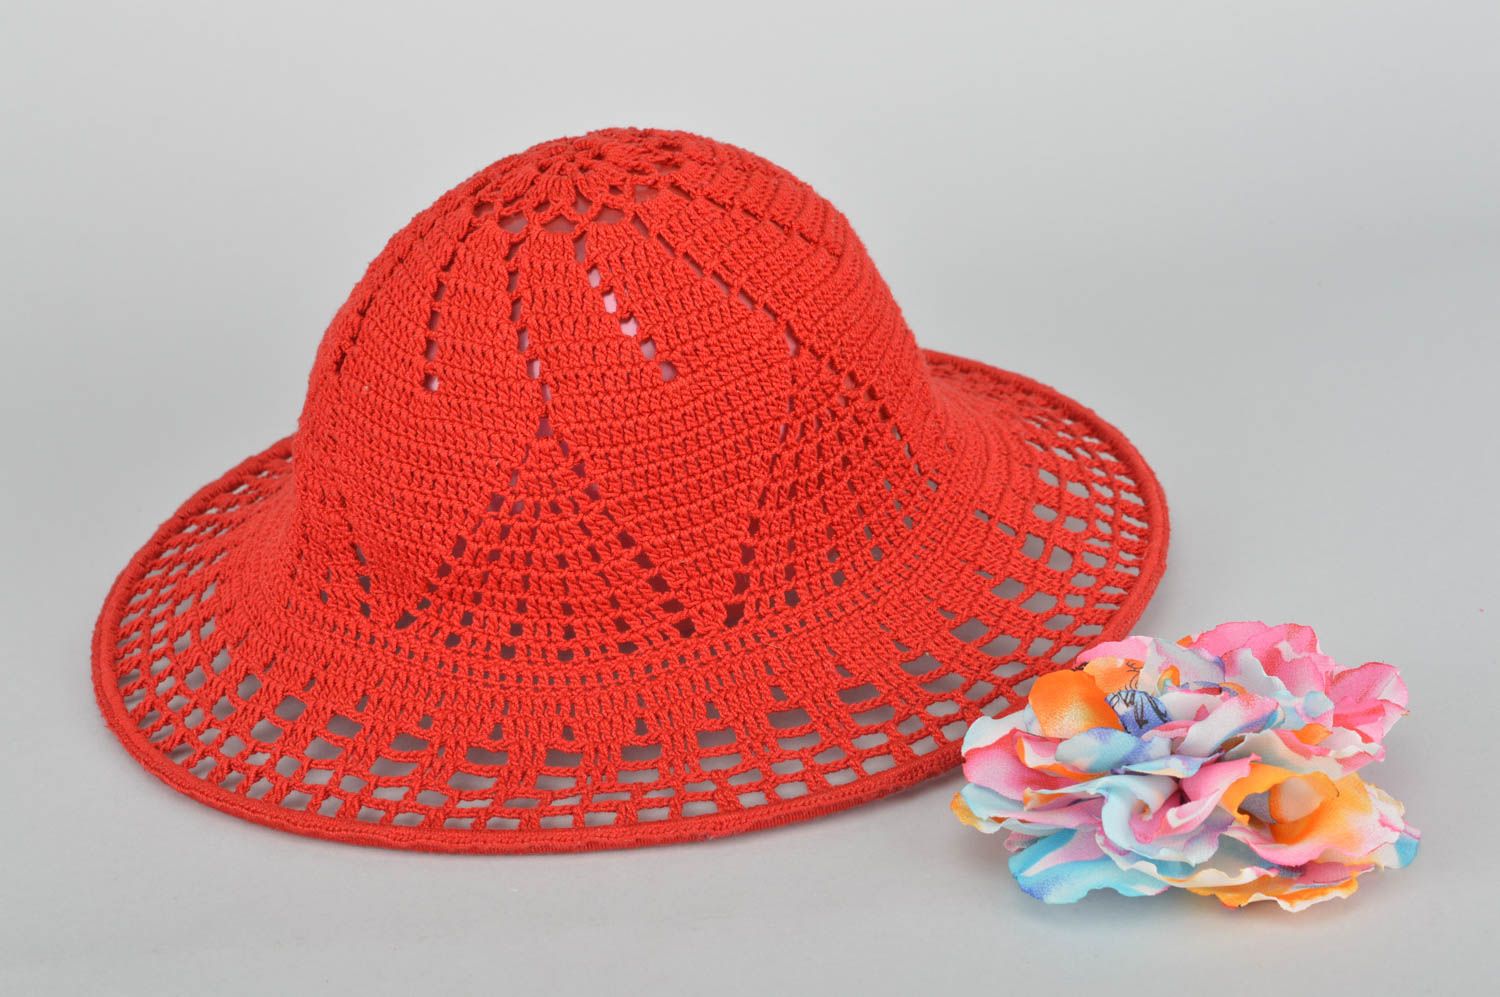 Stylish handmade crochet hat fashion accessories for girls crochet ideas photo 5